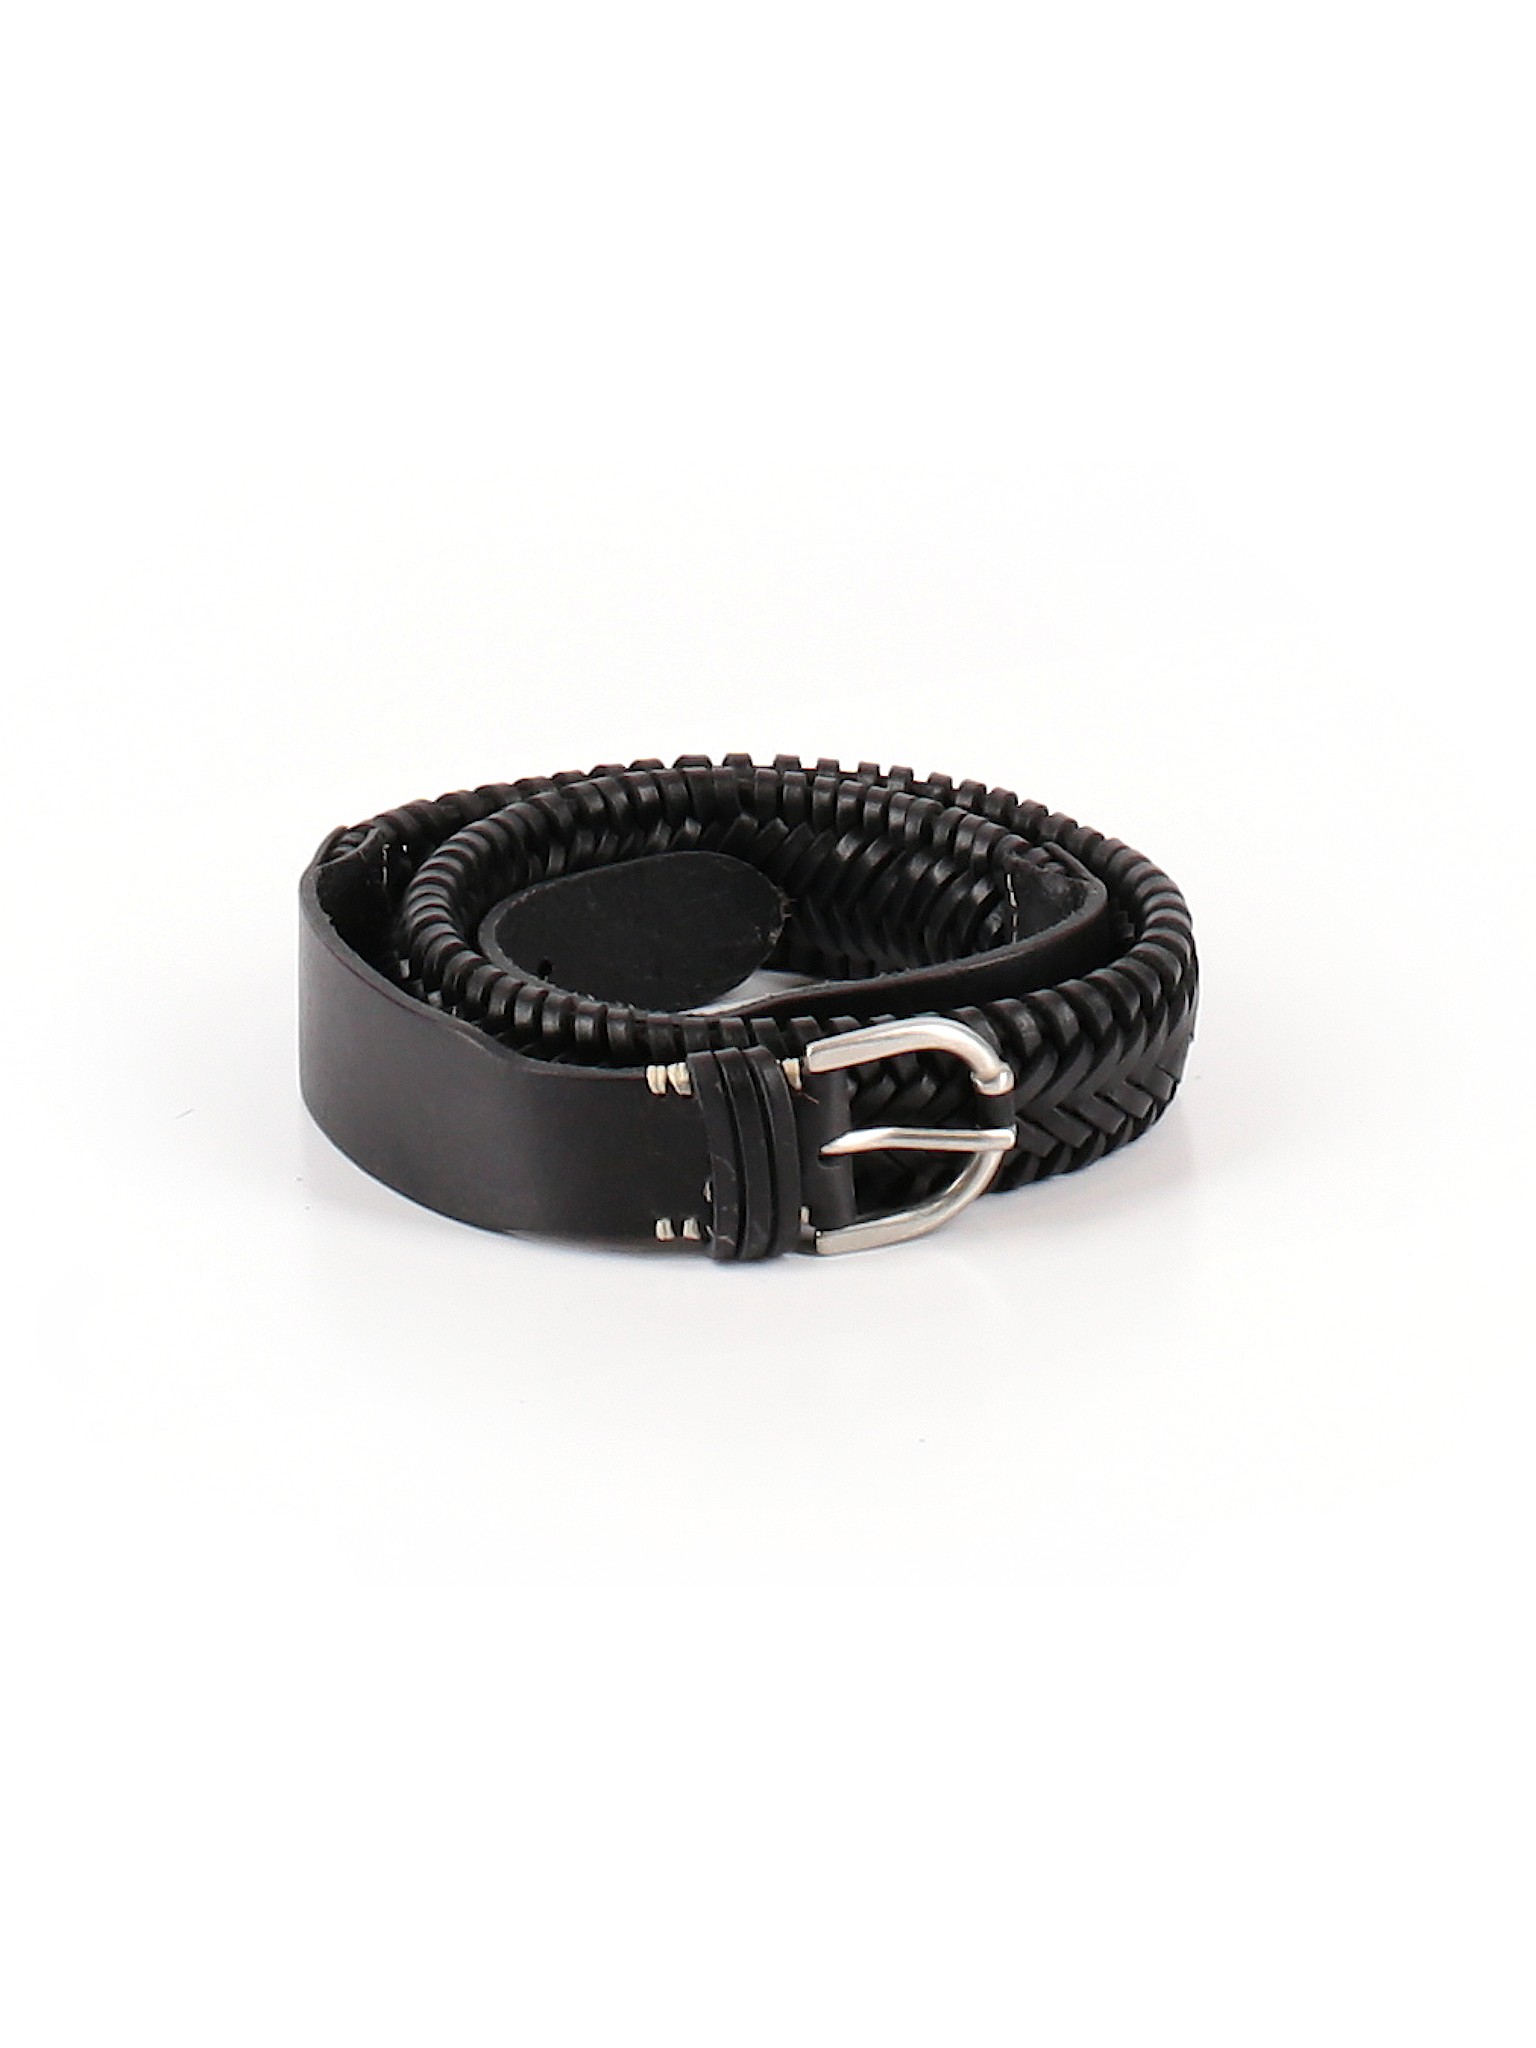 Ariat Women Black Leather Belt M | eBay